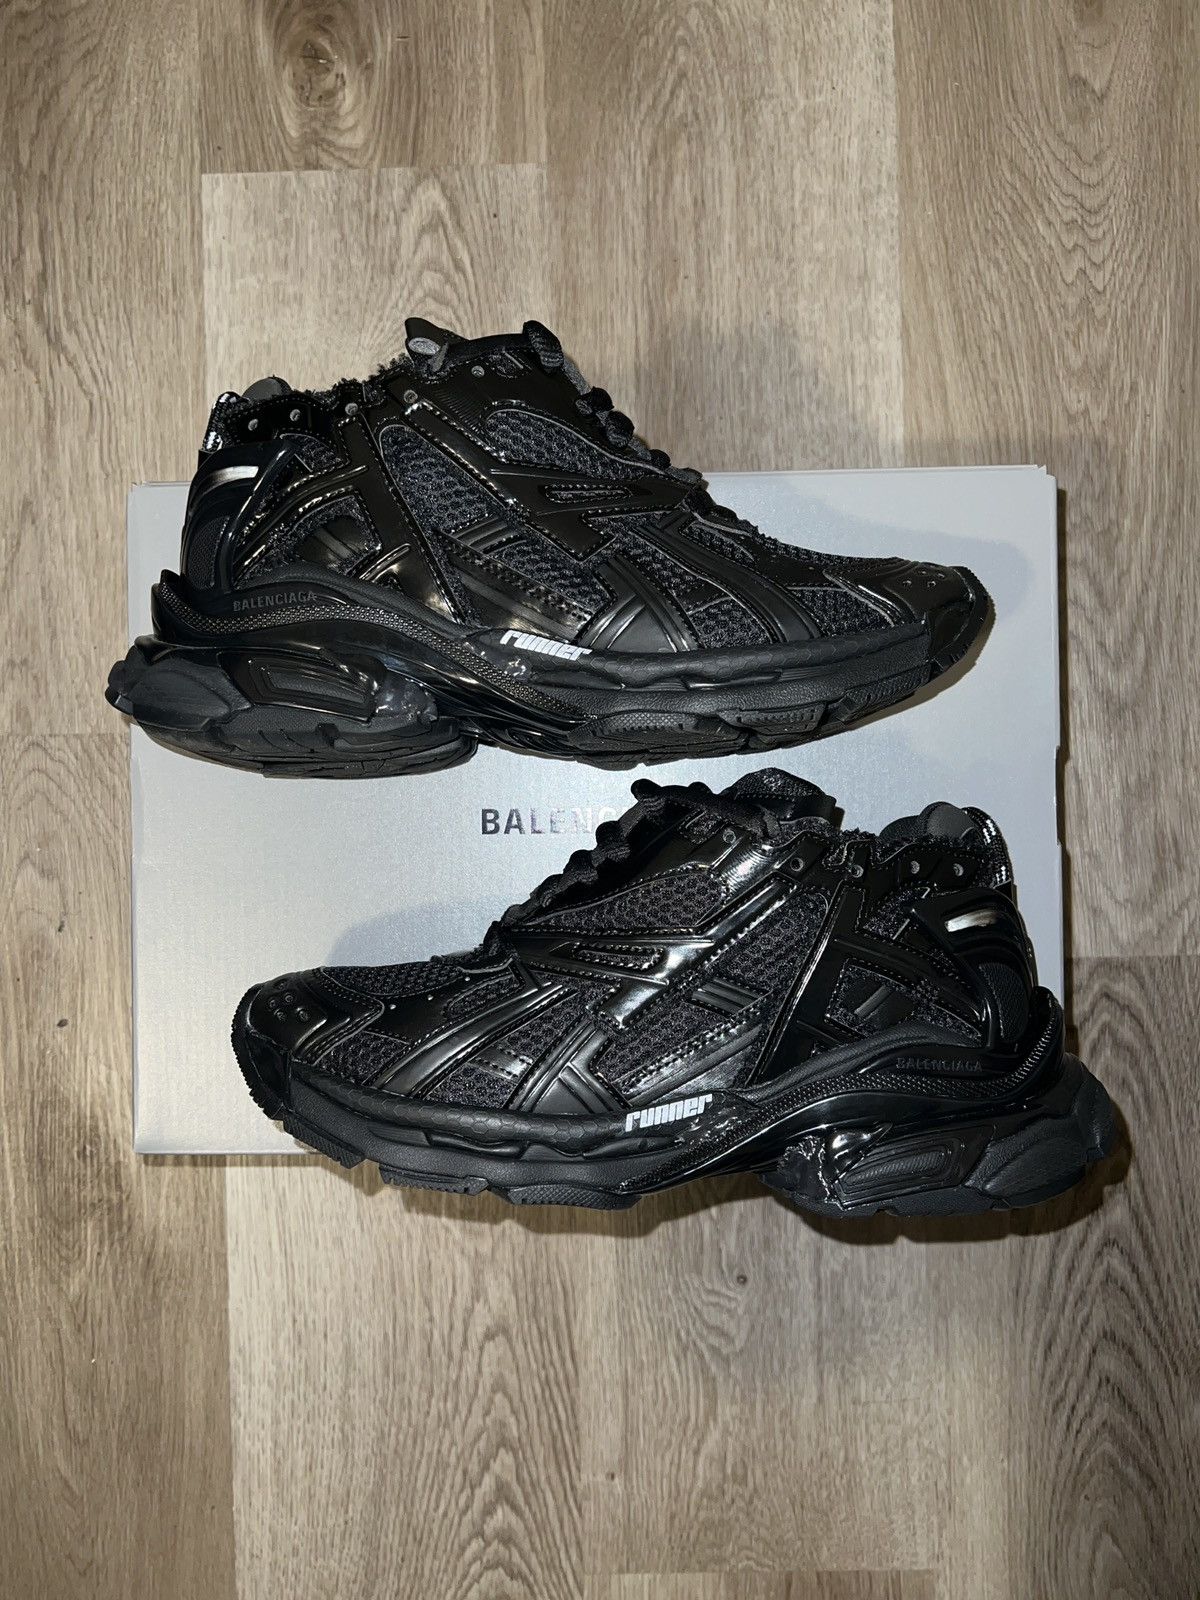 Balenciaga Balenciaga Runners Black Size 40 (7 US) Pre-Owned (LIKE ...